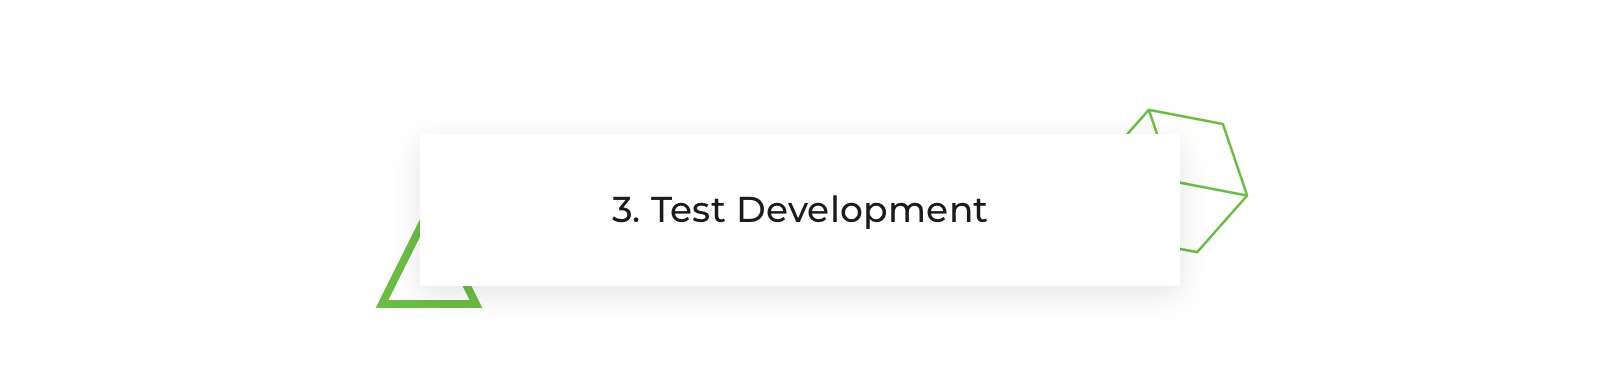 Test-Development